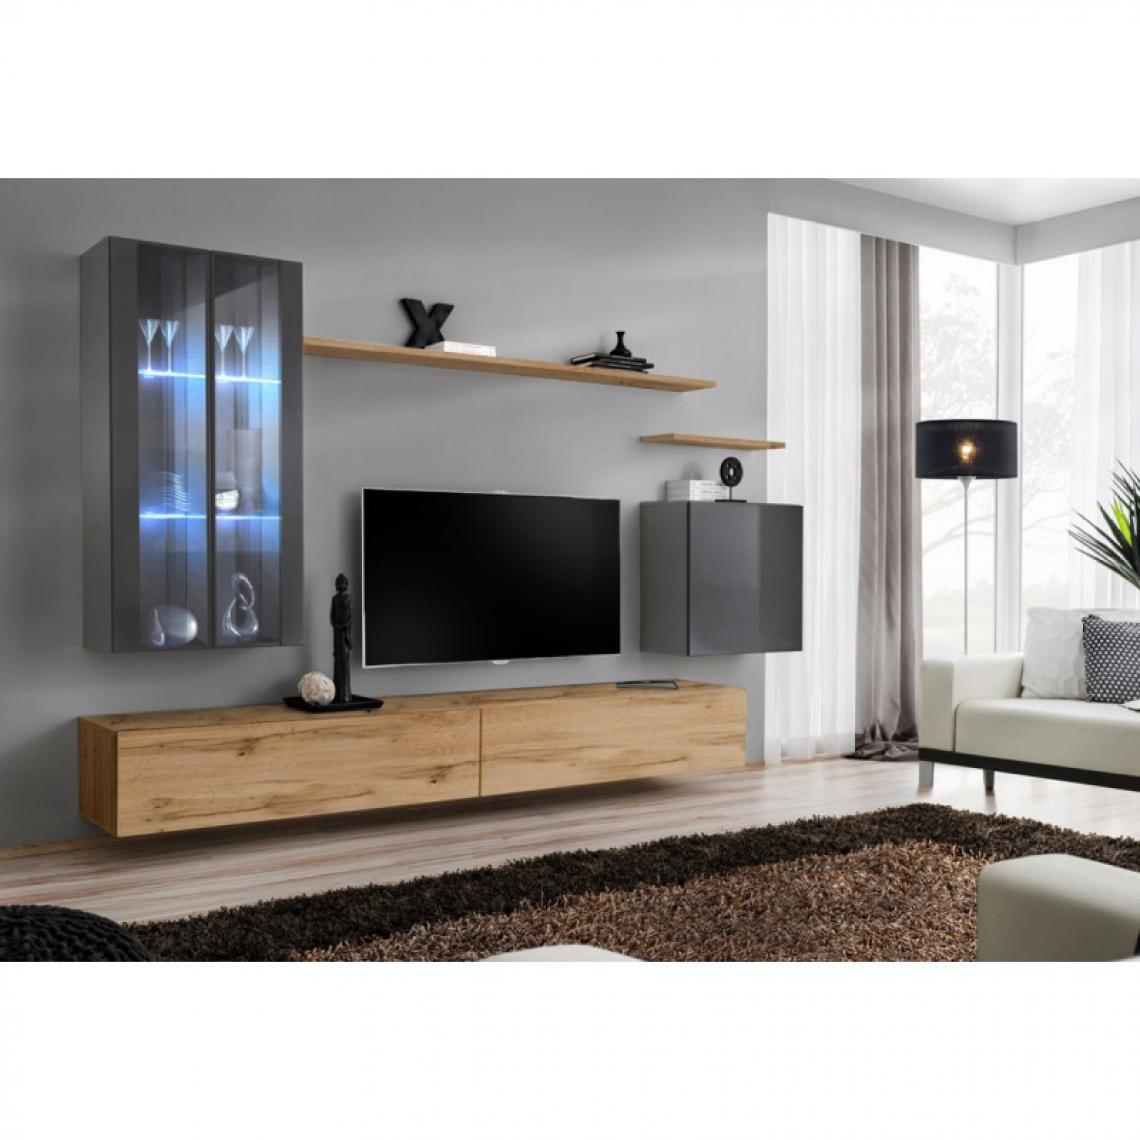 Ac-Deco - Meuble TV Mural Design Switch XII 270cm Gris & Naturel - Meubles TV, Hi-Fi